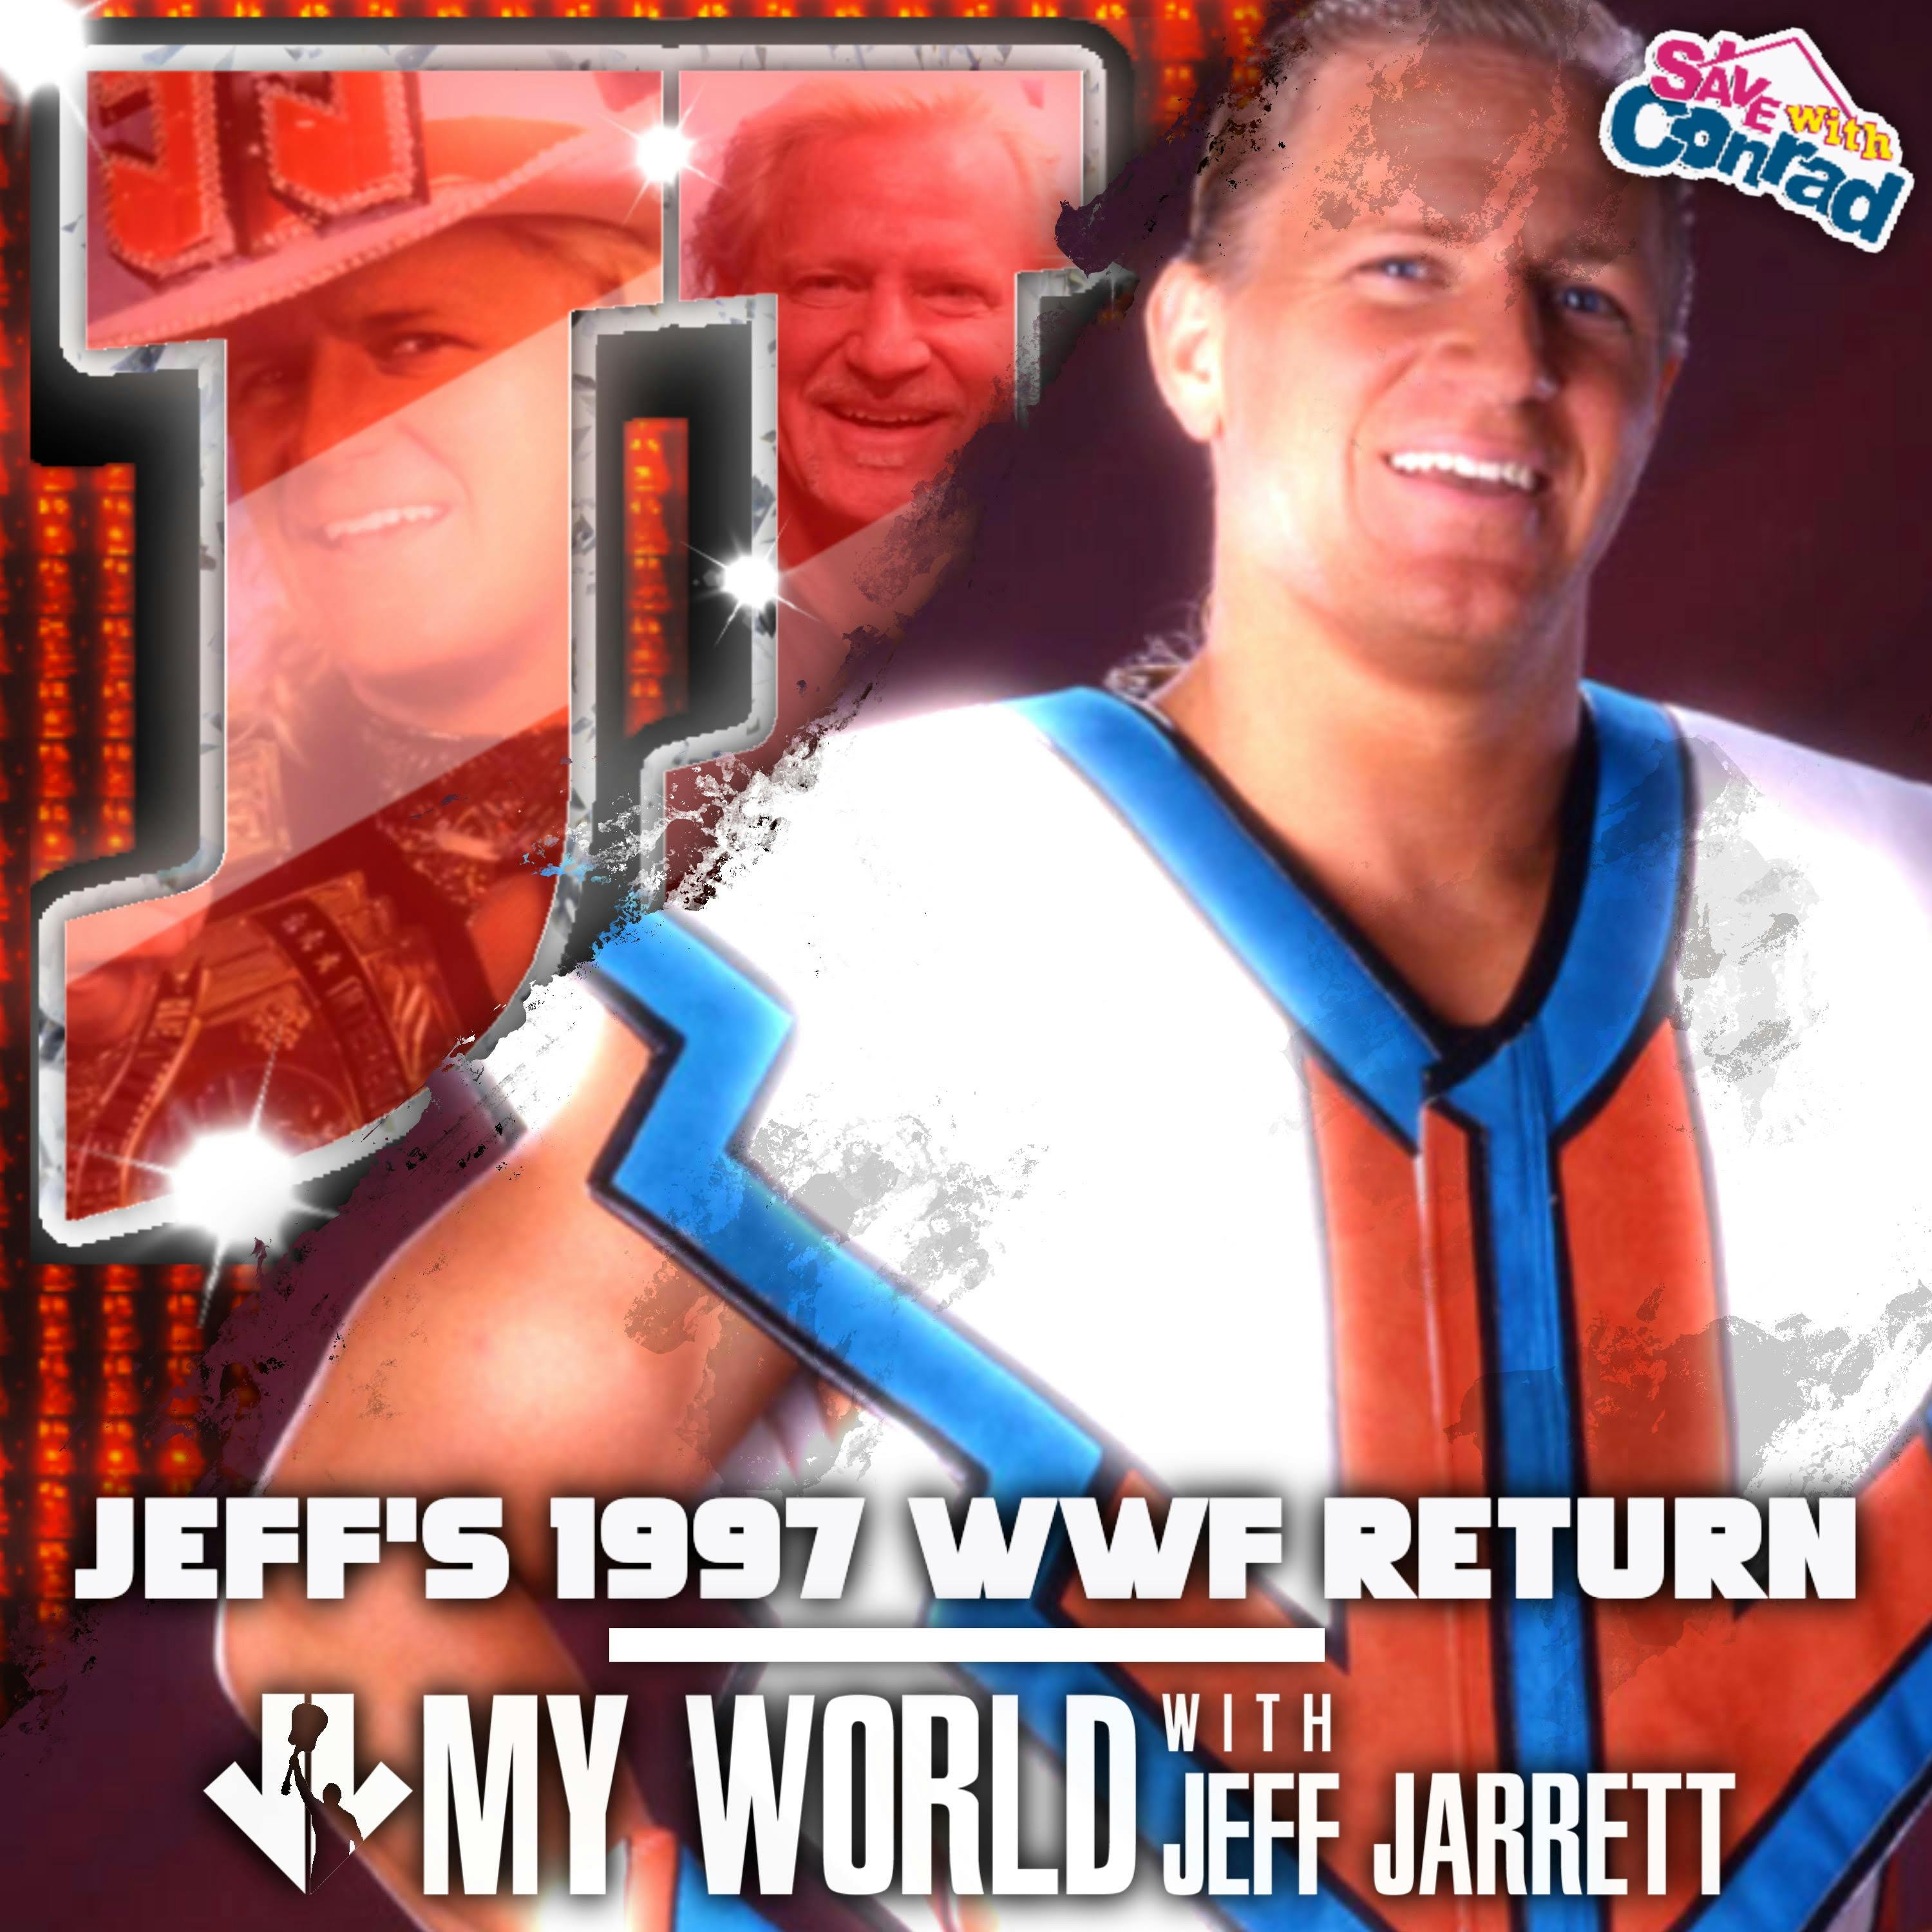 Episode 86: Jeff's 1997 WWF Return